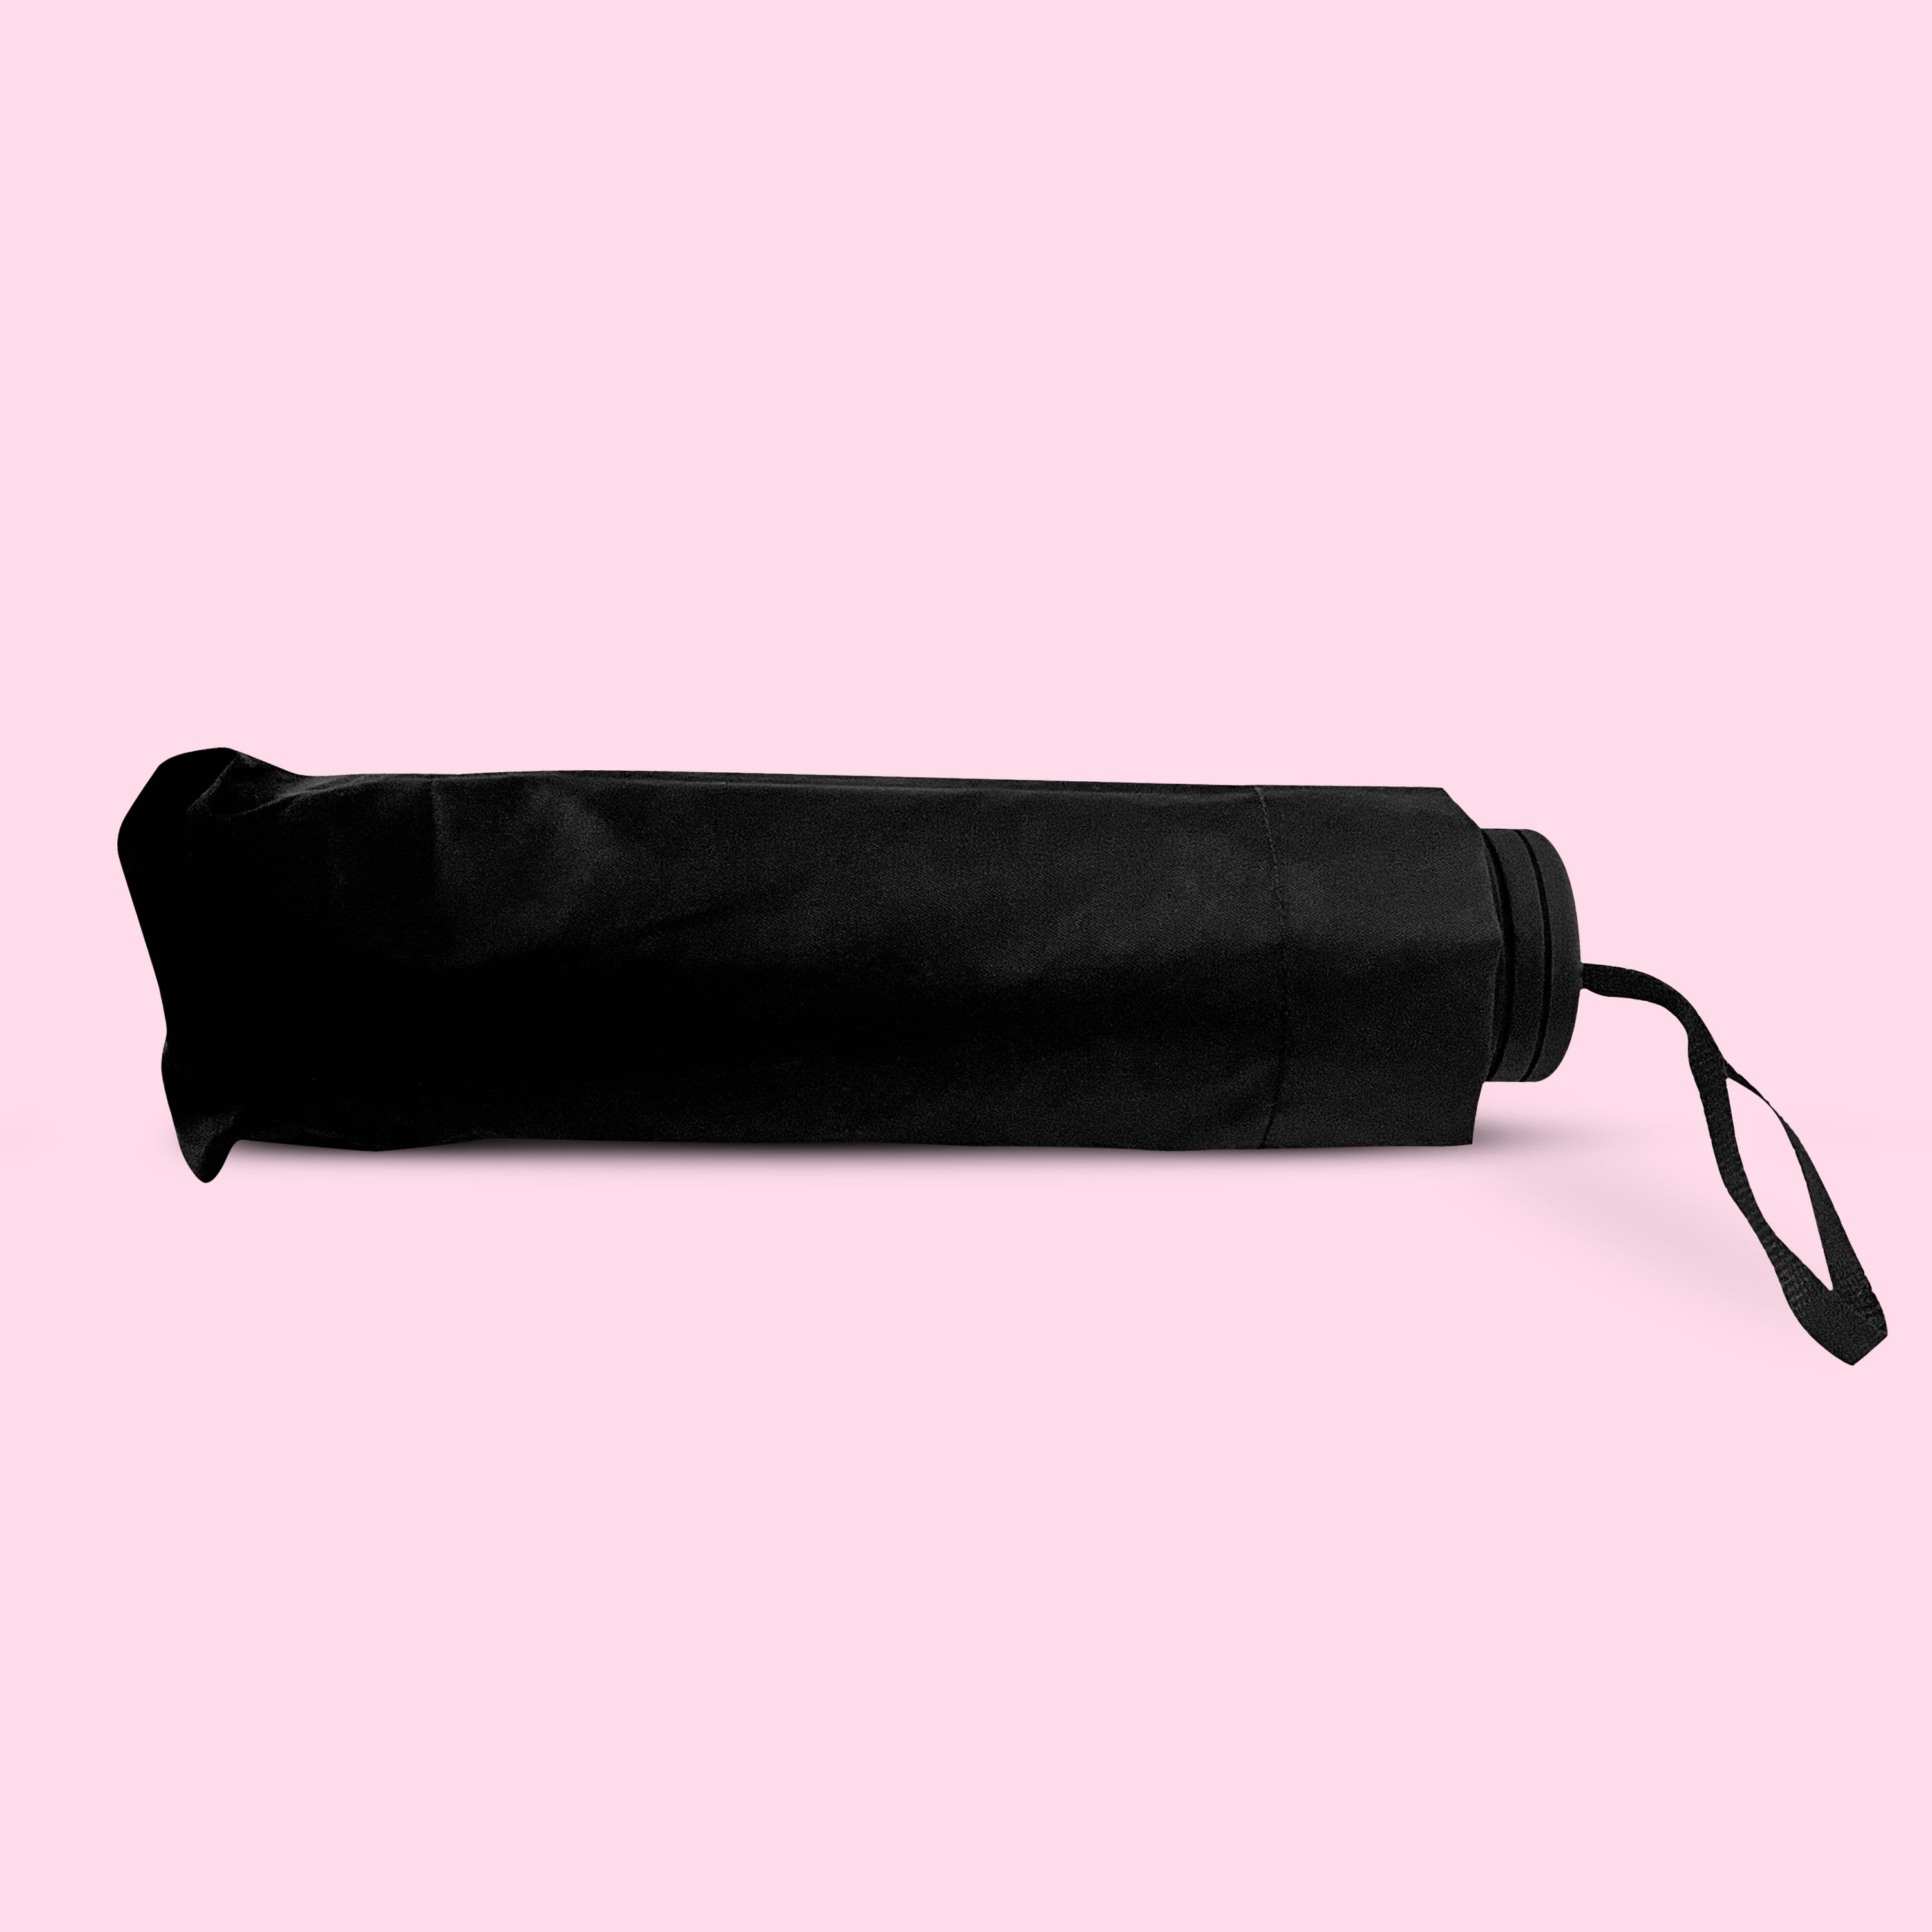 Secret Flask - Umbrella Flask - 8 Oz Capacity - Sneak Your Liquor into Any Event